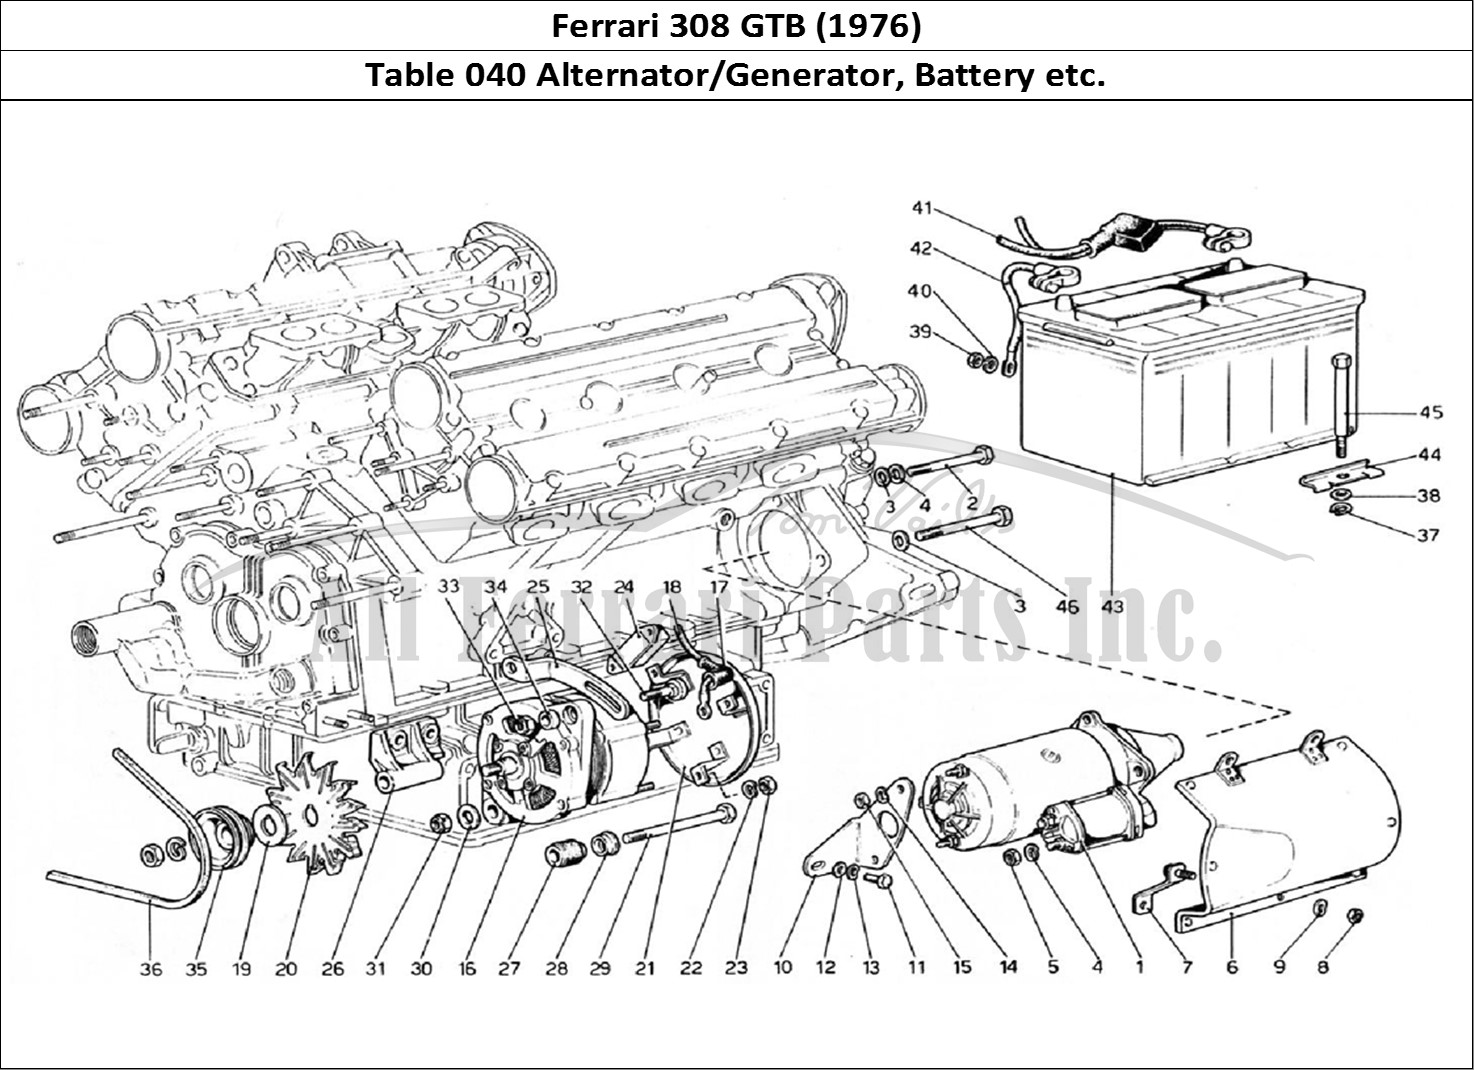 Ferrari Parts Ferrari 308 GTB (1976) Page 040 Eletric Generating System